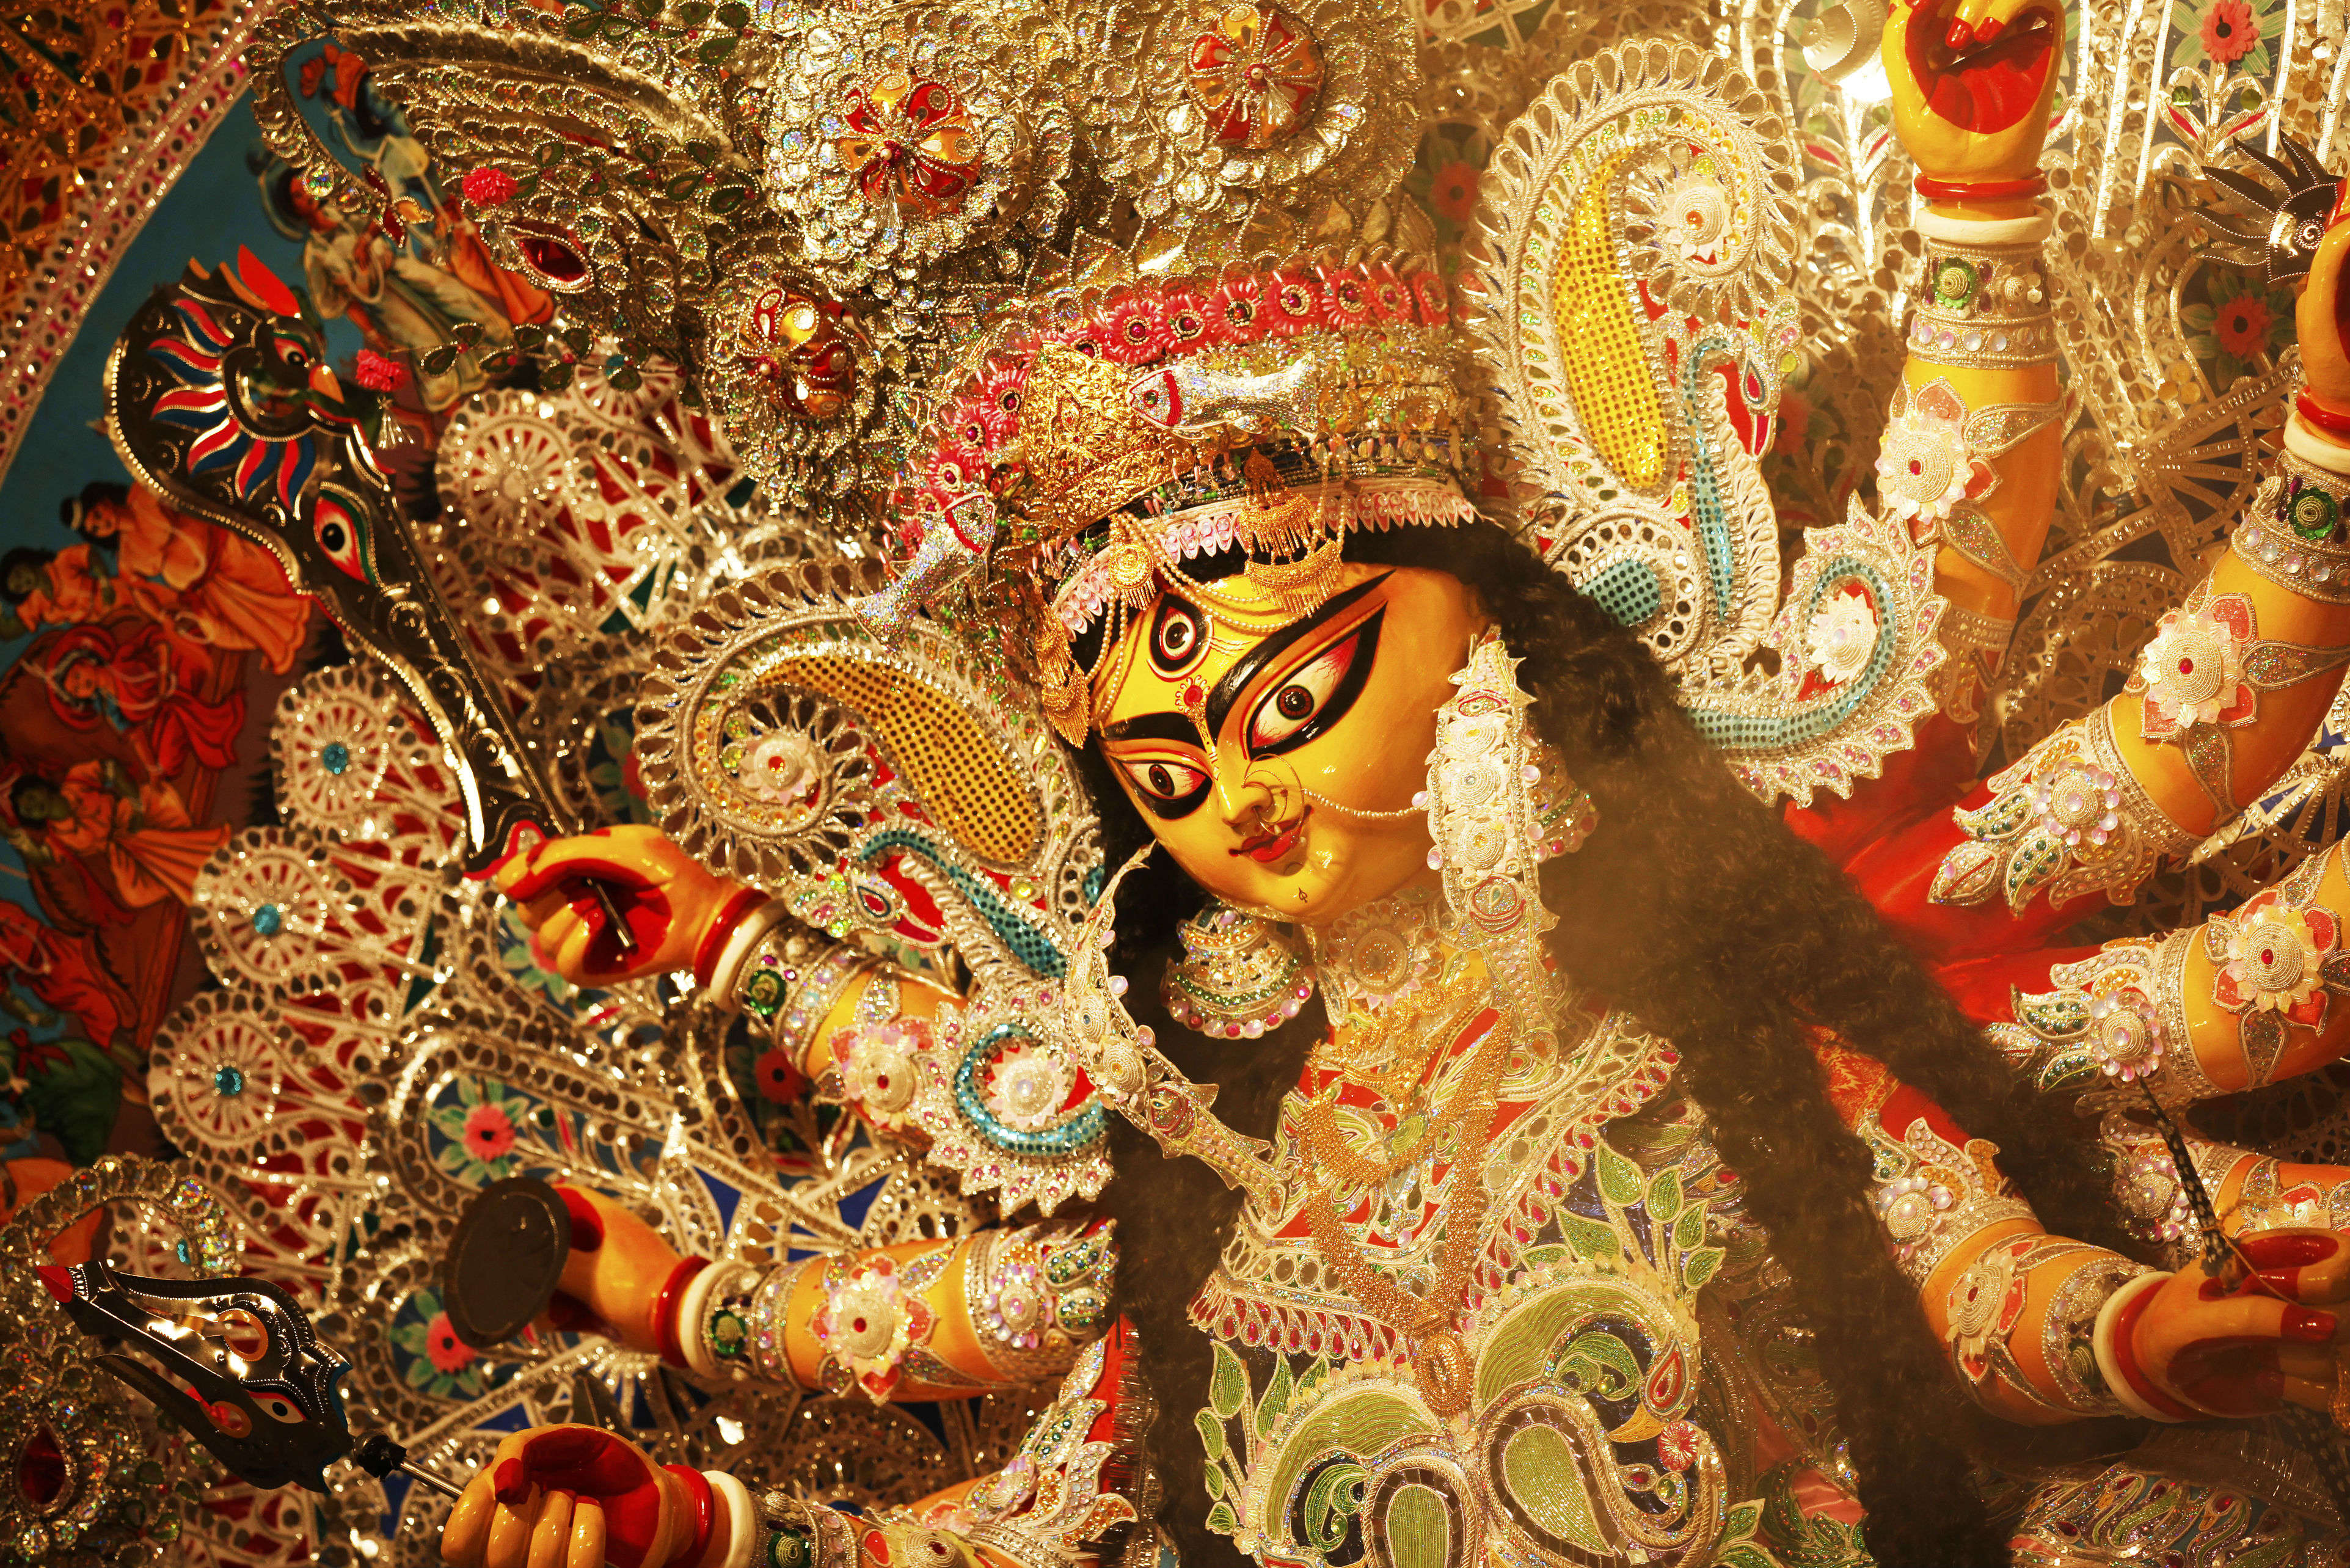 Thames River festival to showcase Durga Puja in 2018